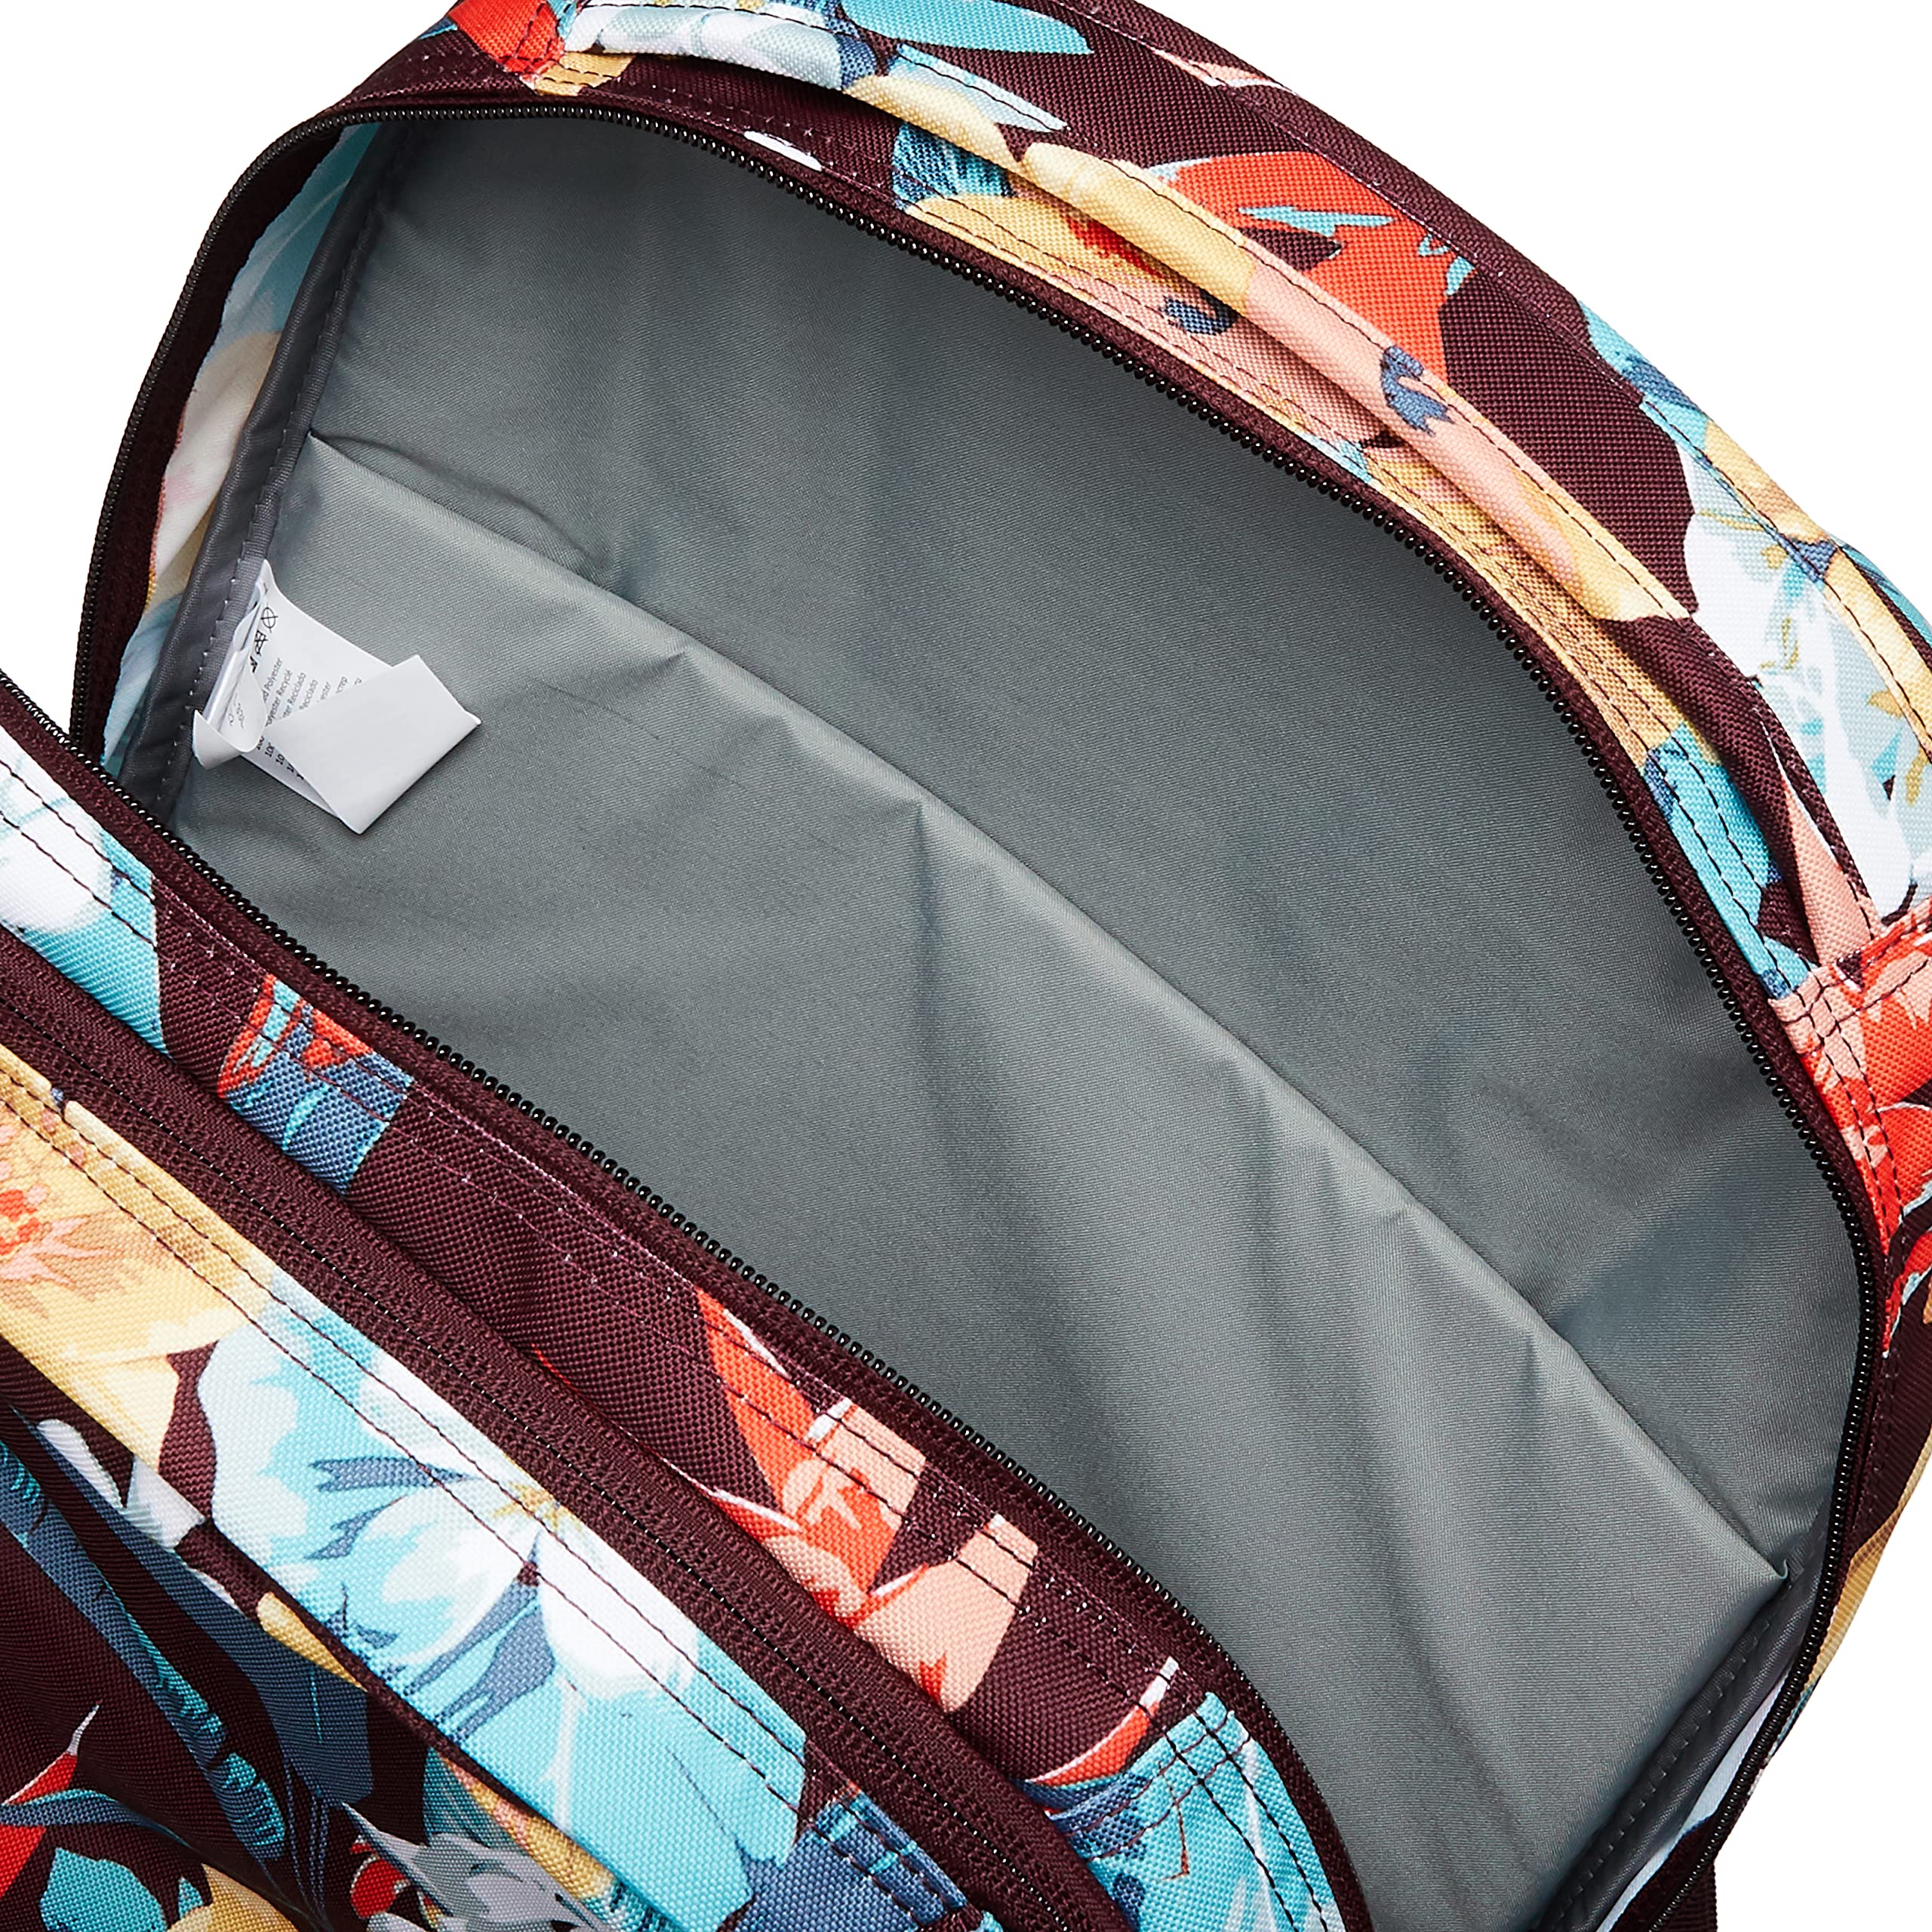 DAKINE(ダカイン) Dakain CAMPUS33L FLB Backpack